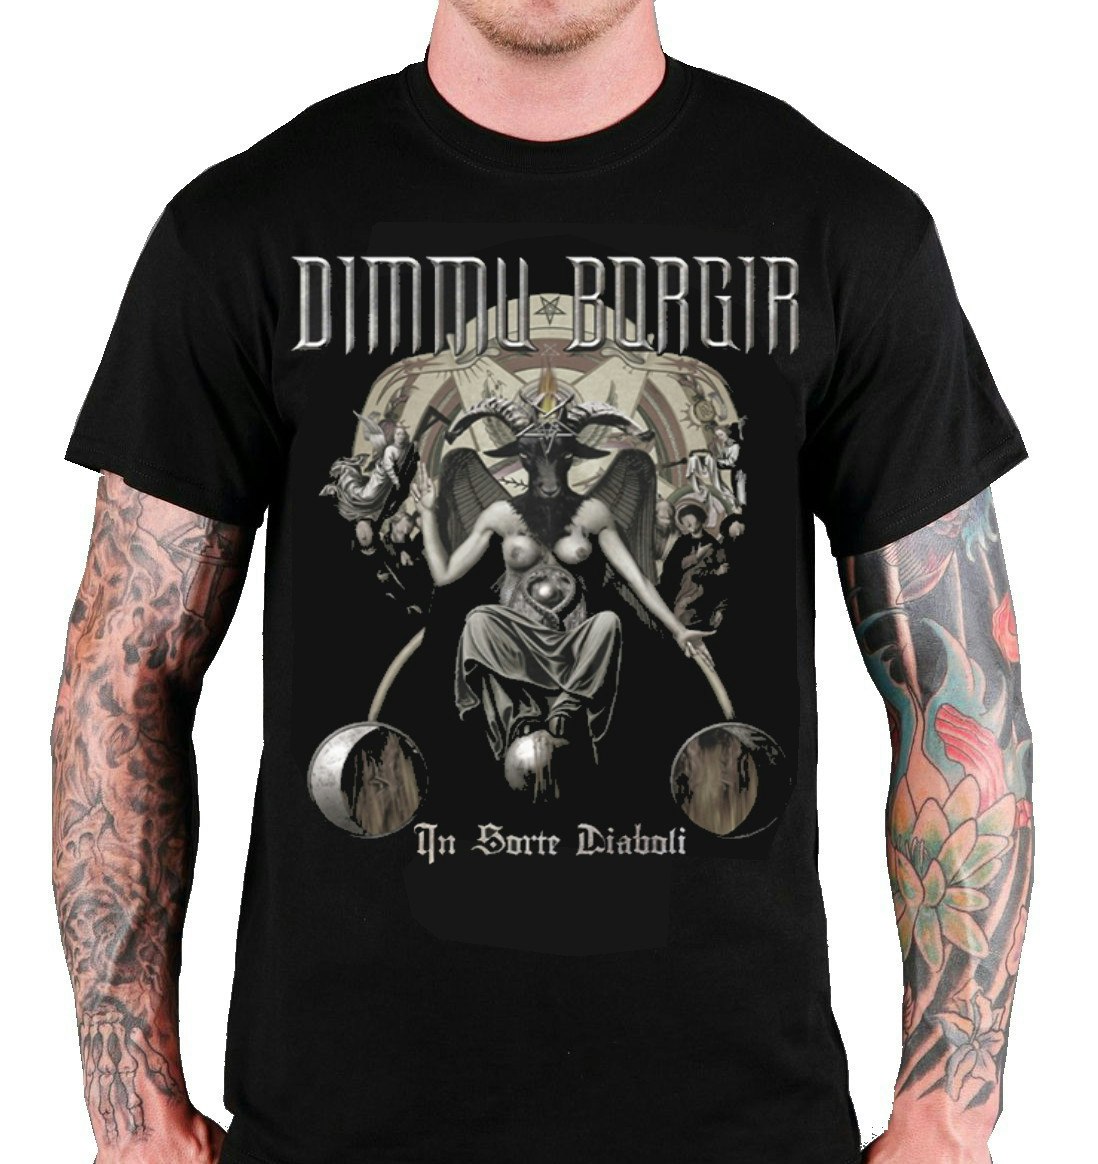 DIMMU BORGIR - GOAT  T-Shirt